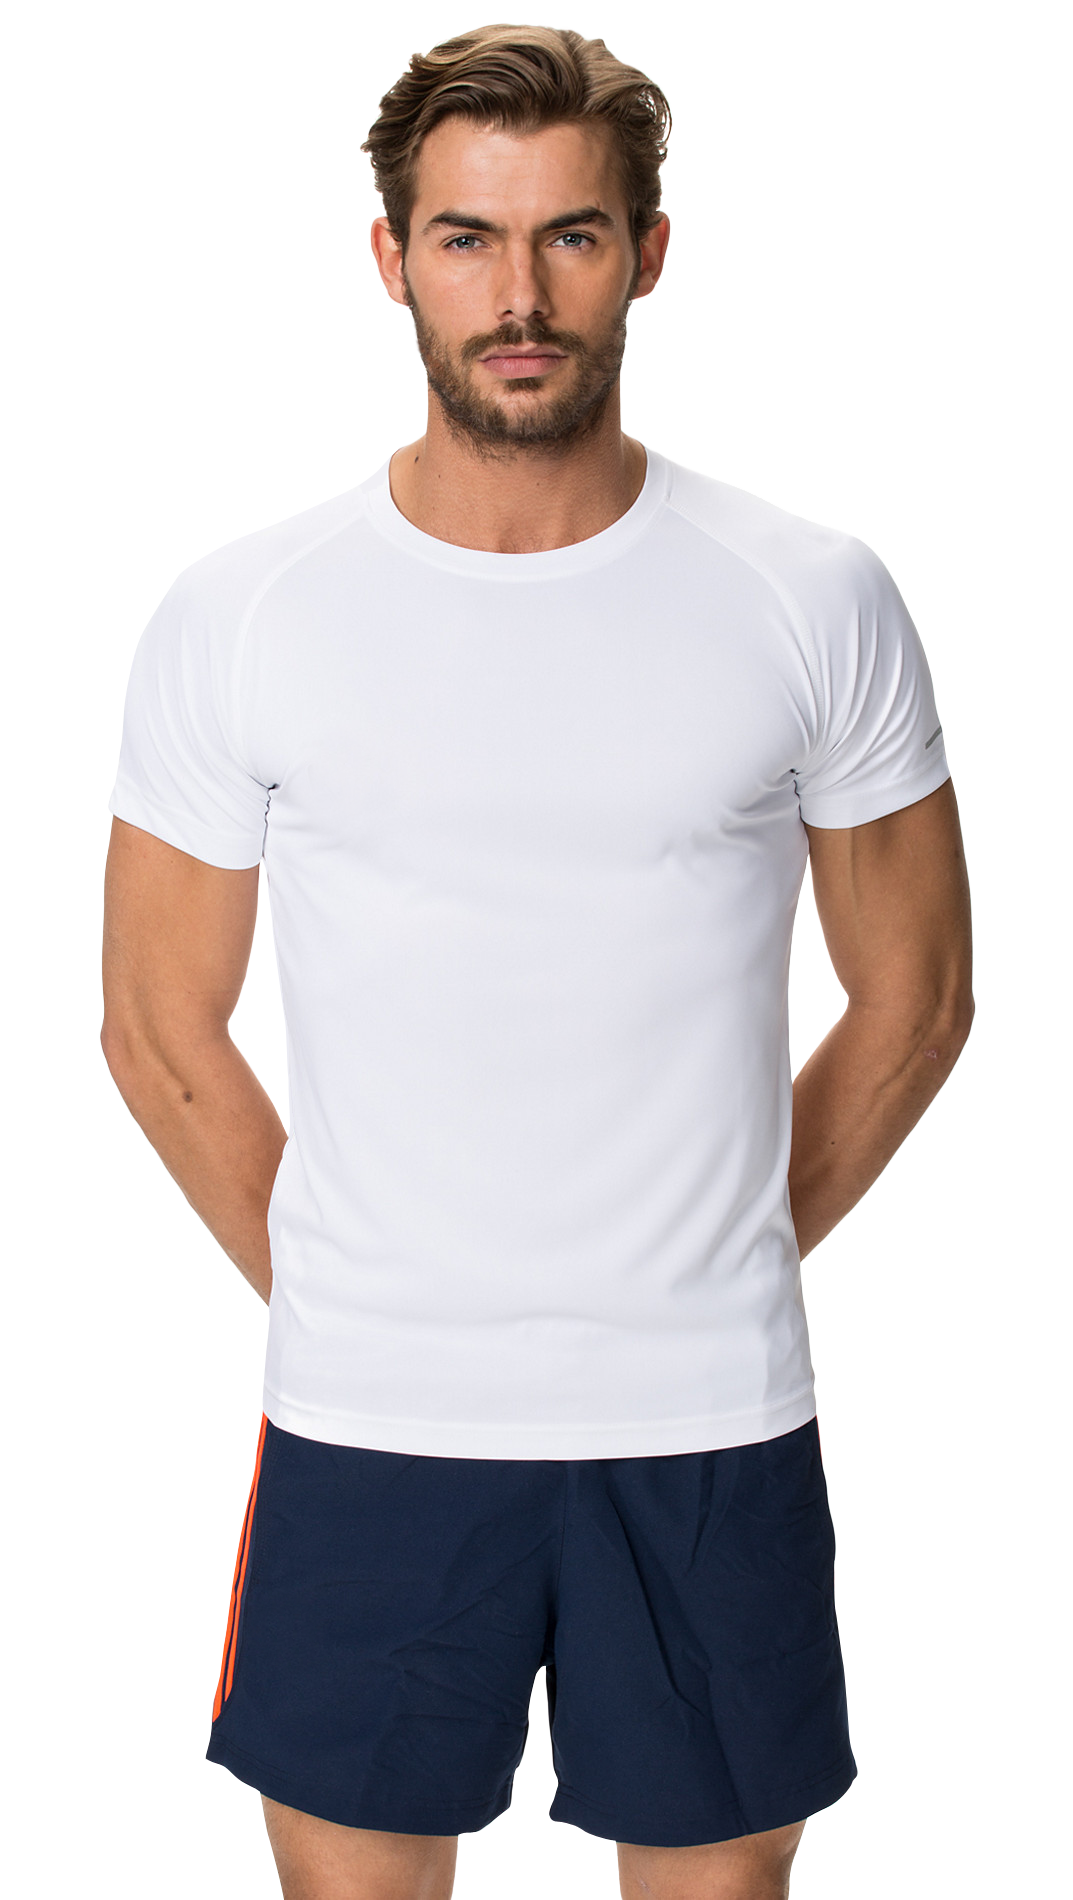 Athletic Man White Shirt Navy Shorts PNG